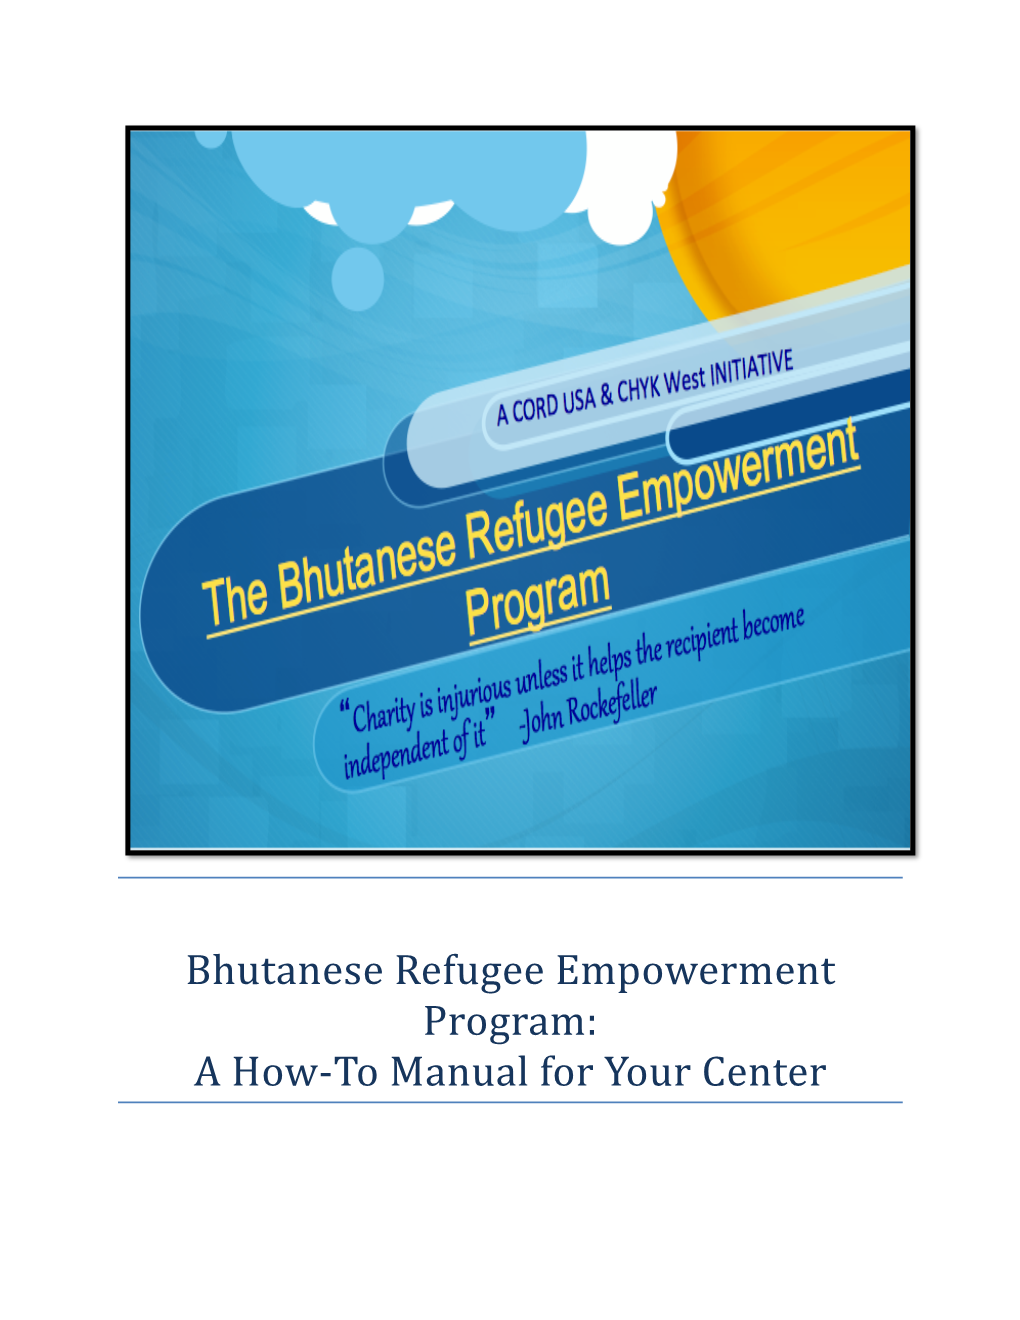 Bhutanese Refugees Empowerment Program Manual